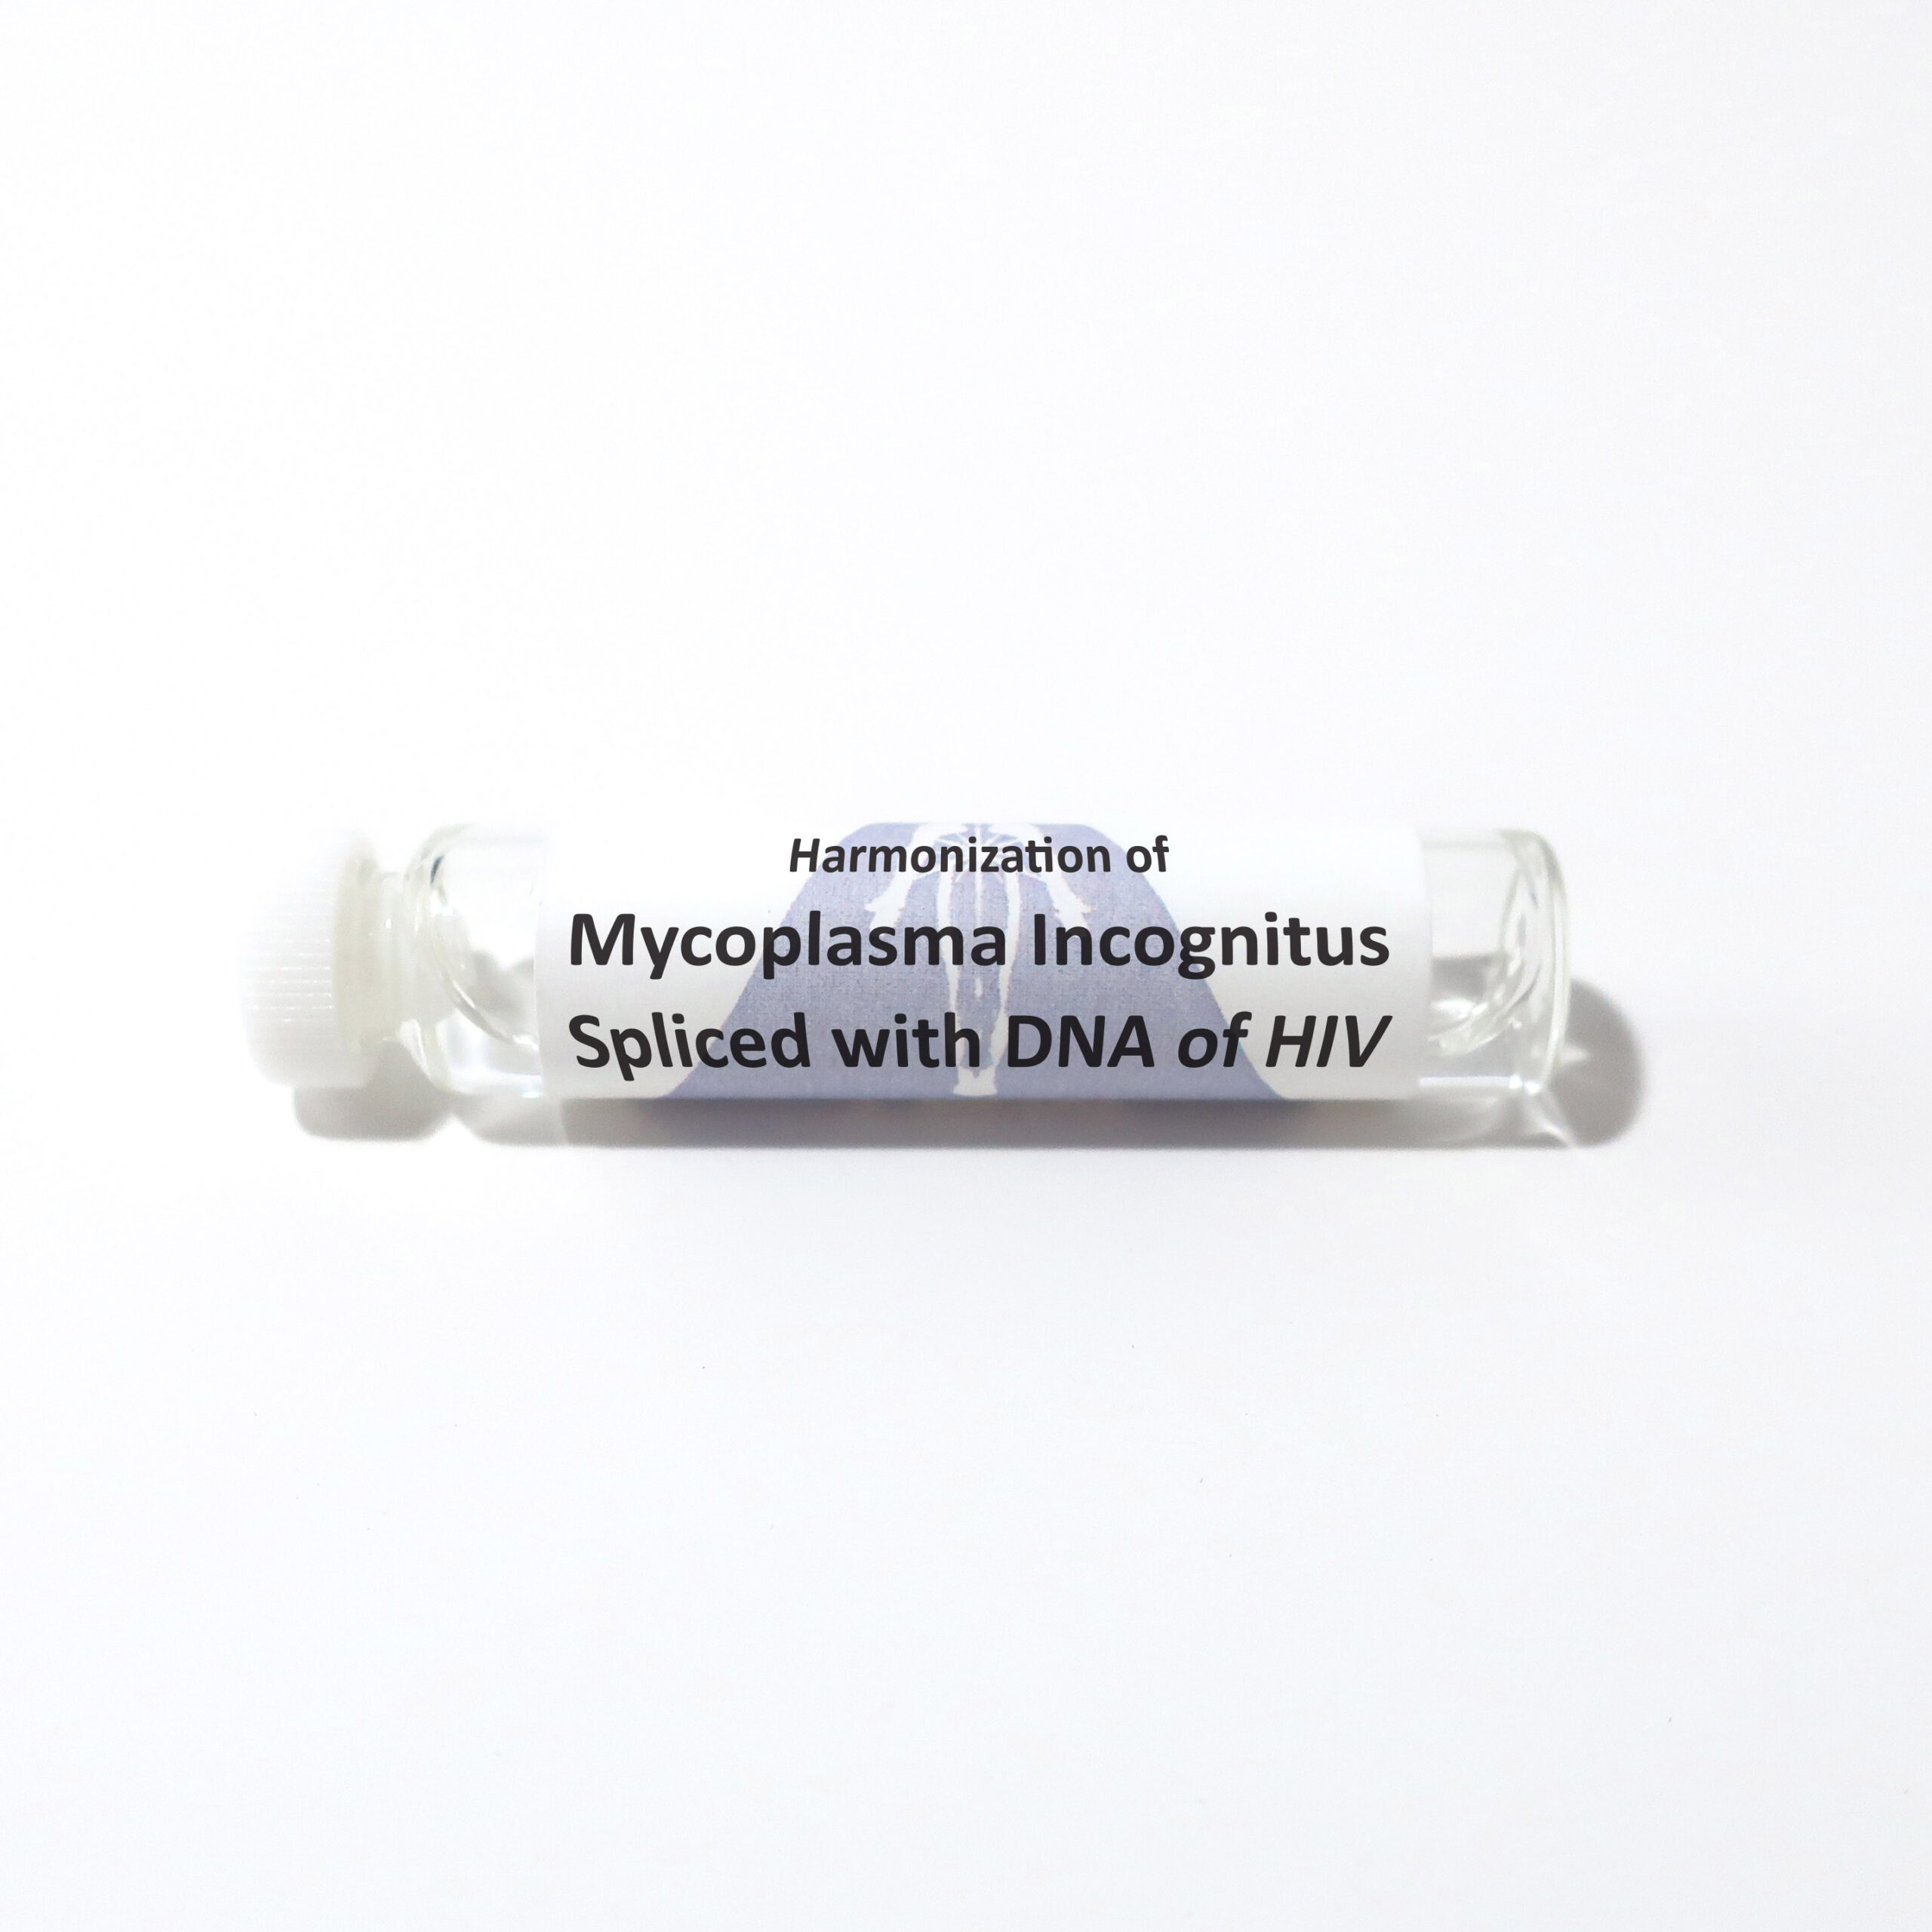 Mycoplasma incognitus Spliced with DNA of HIV